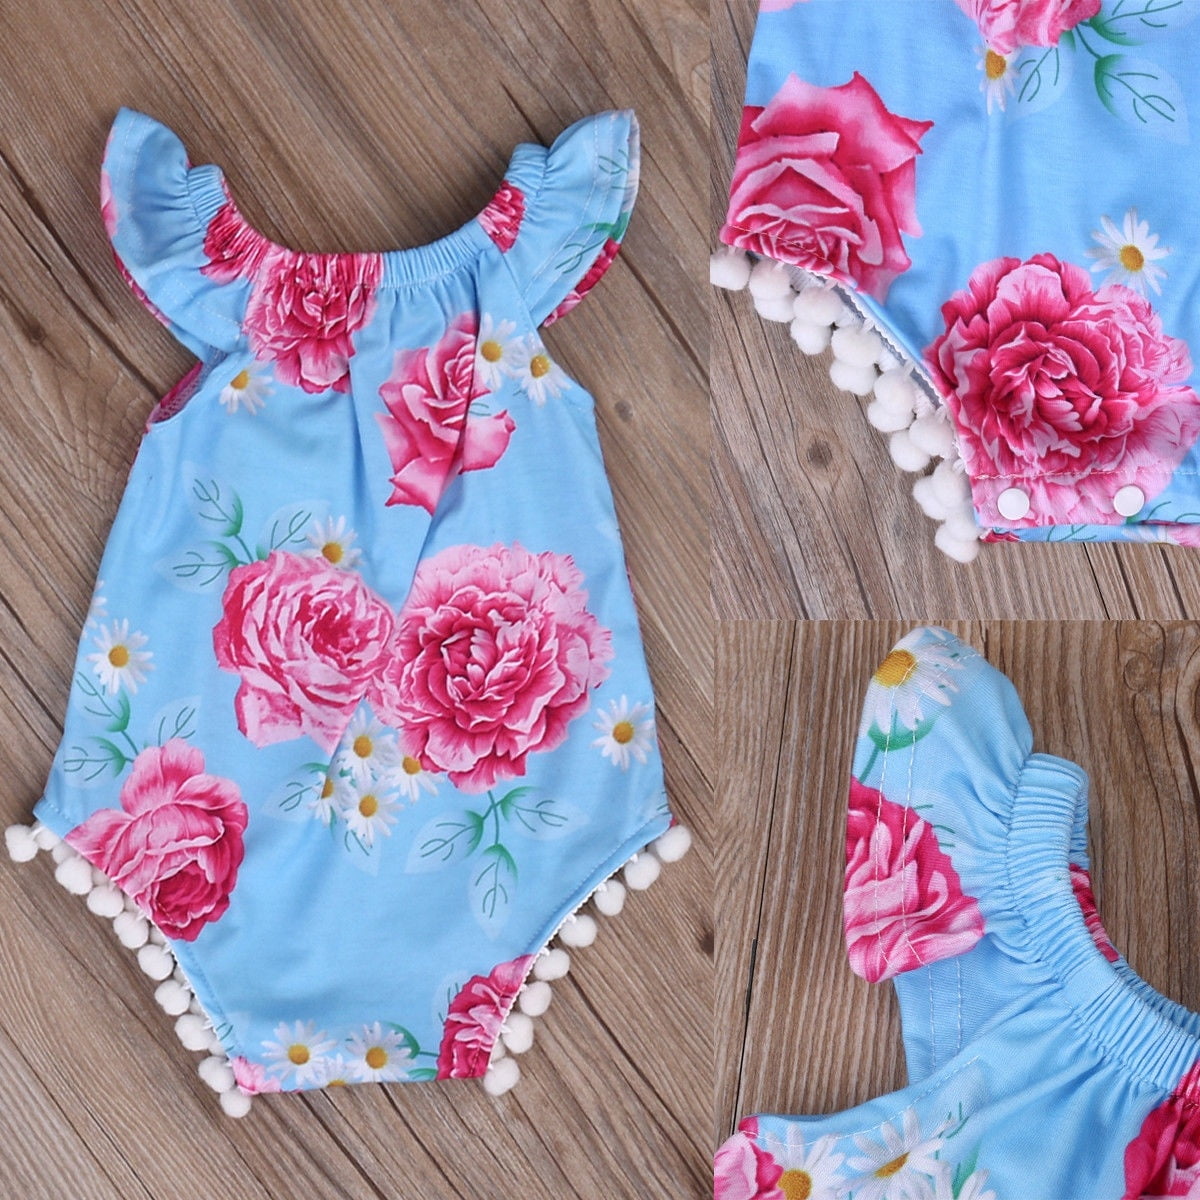 Newborn Baby Girls Boys Floral Romper Bodysuit Jumpsuit Playsuit Outfit Clothes 